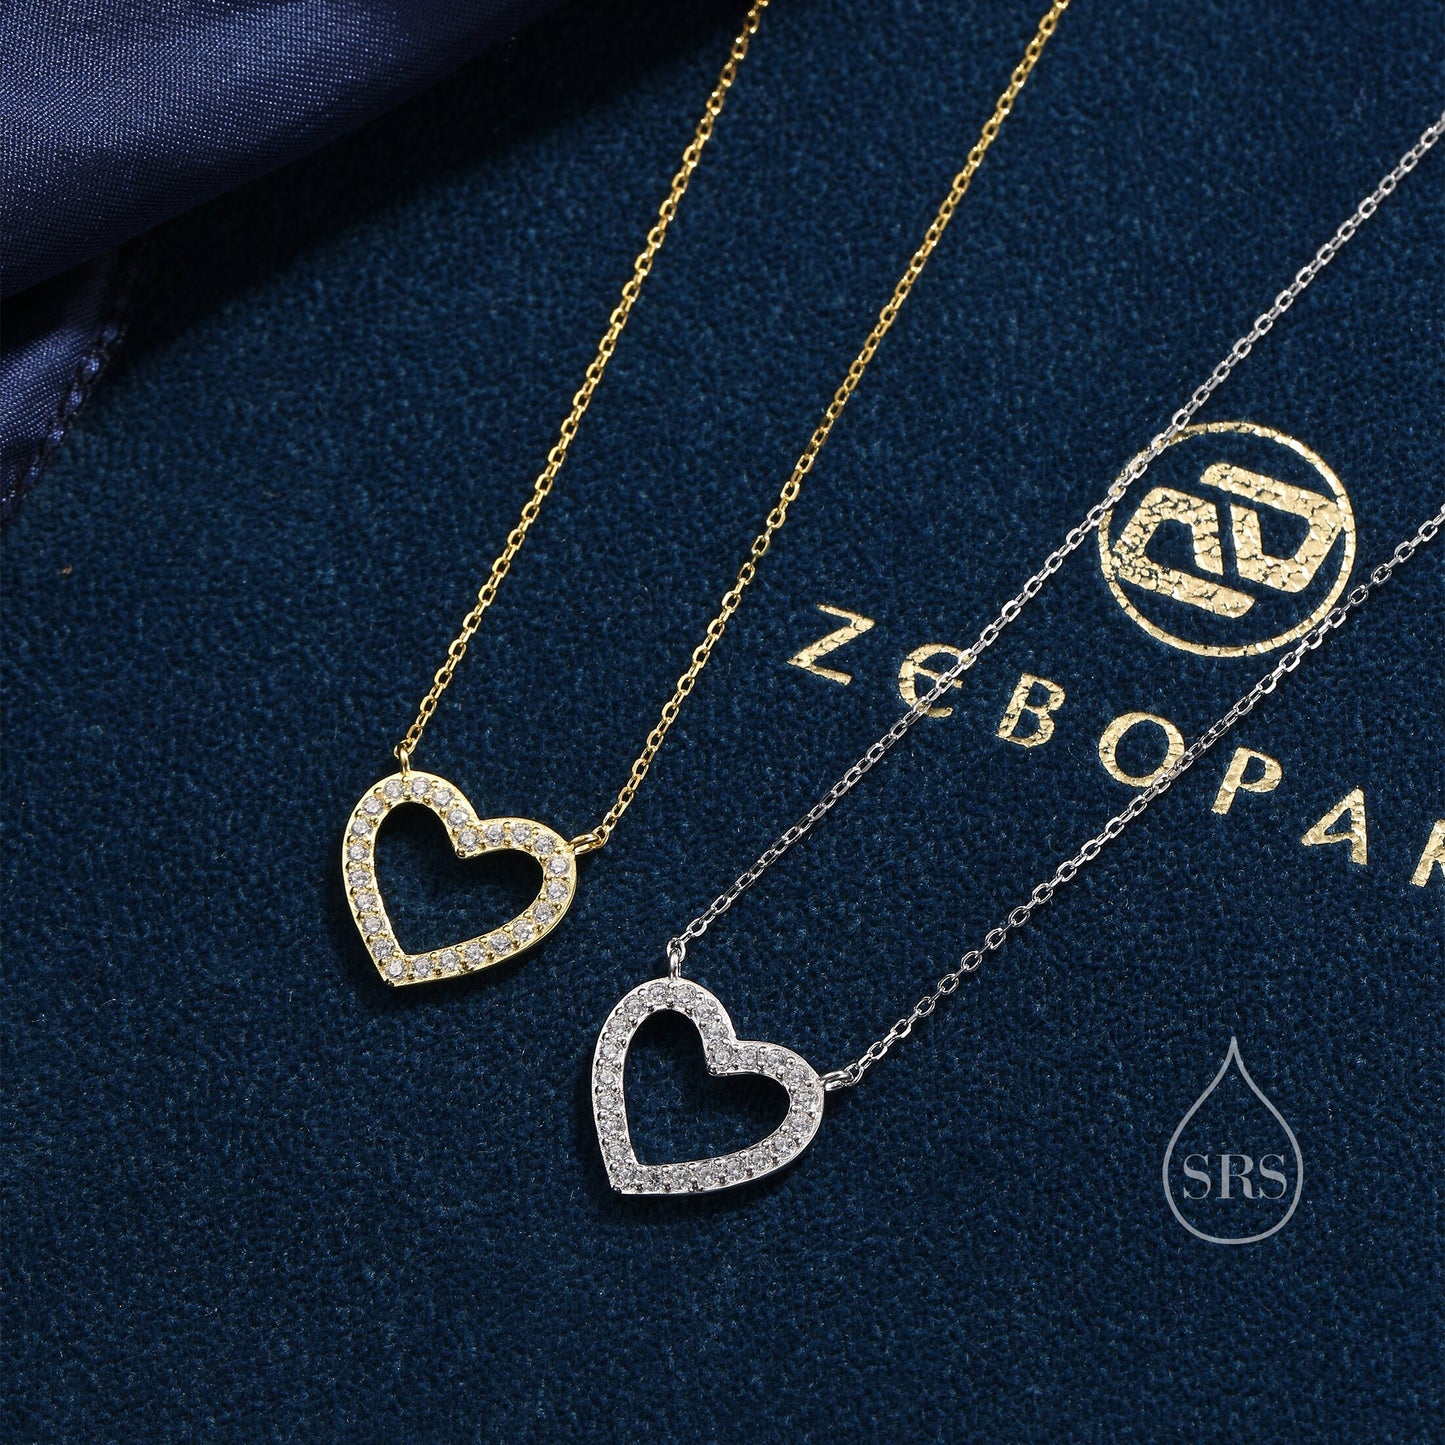 Open Heart CZ Necklace in Sterling Silver, Silver or Gold, Heart Necklace, Sparkly CZ Necklace